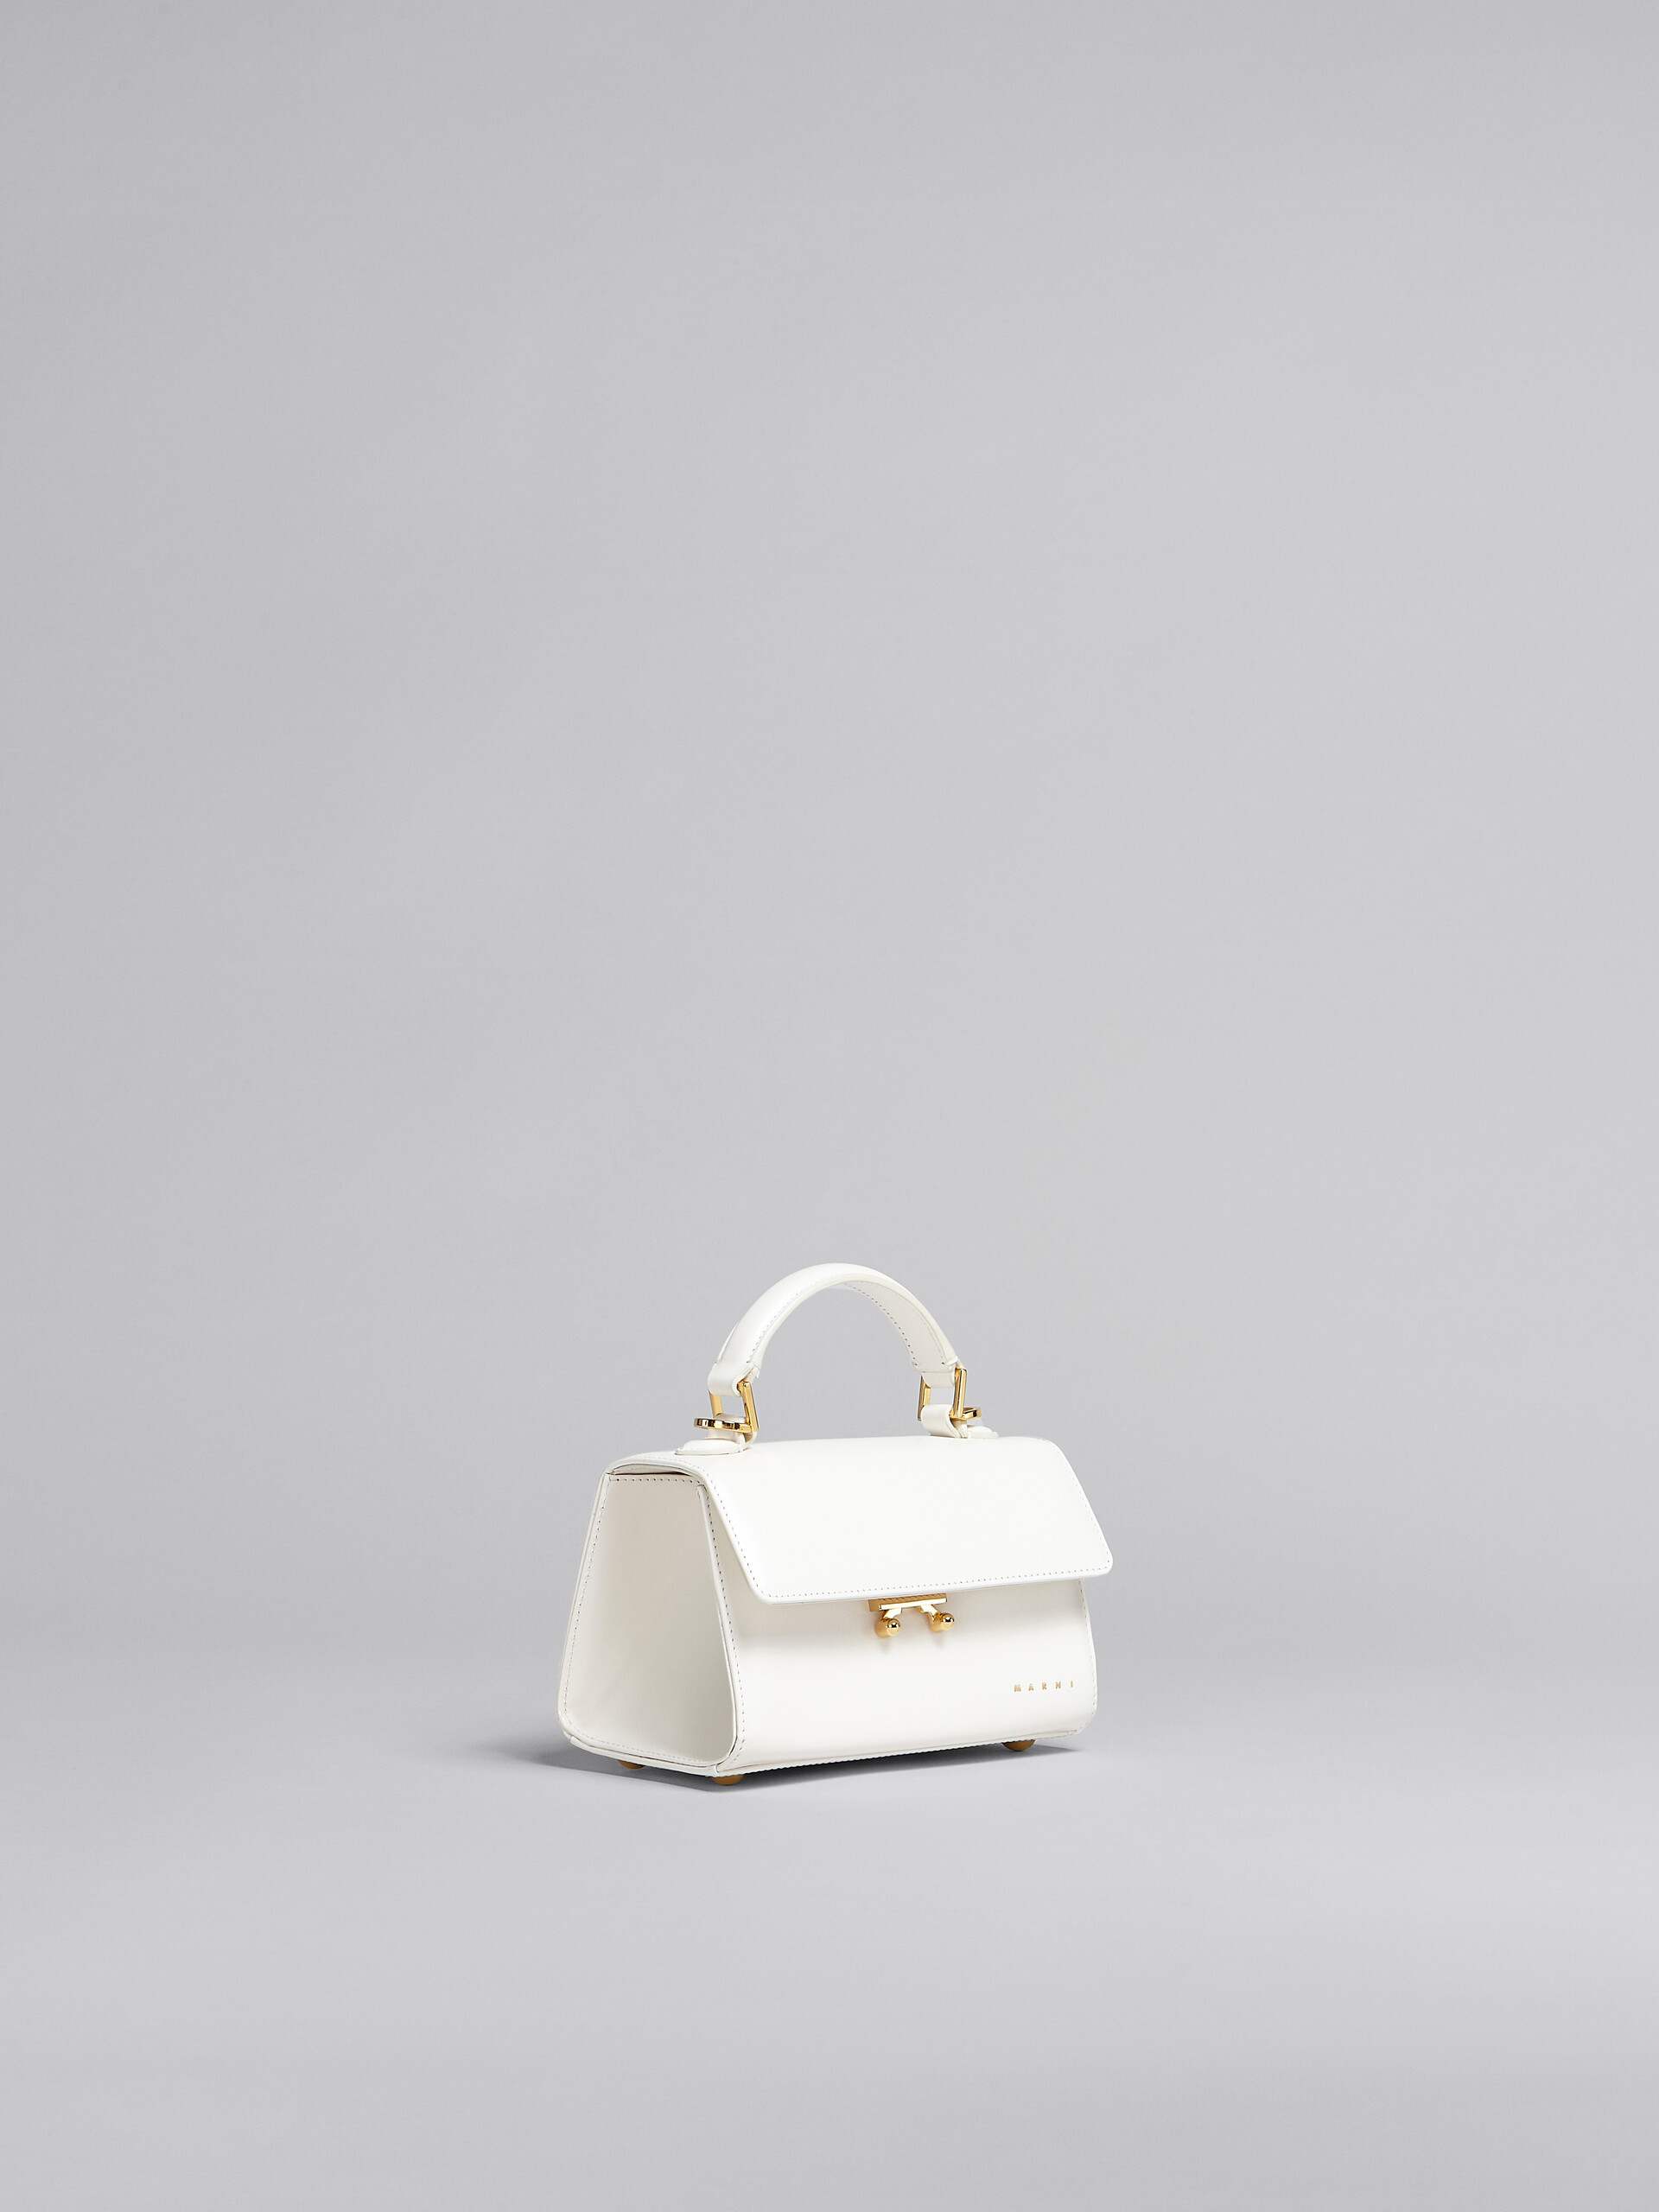 Relativity Mini Bag in white leather - Handbag - Image 6